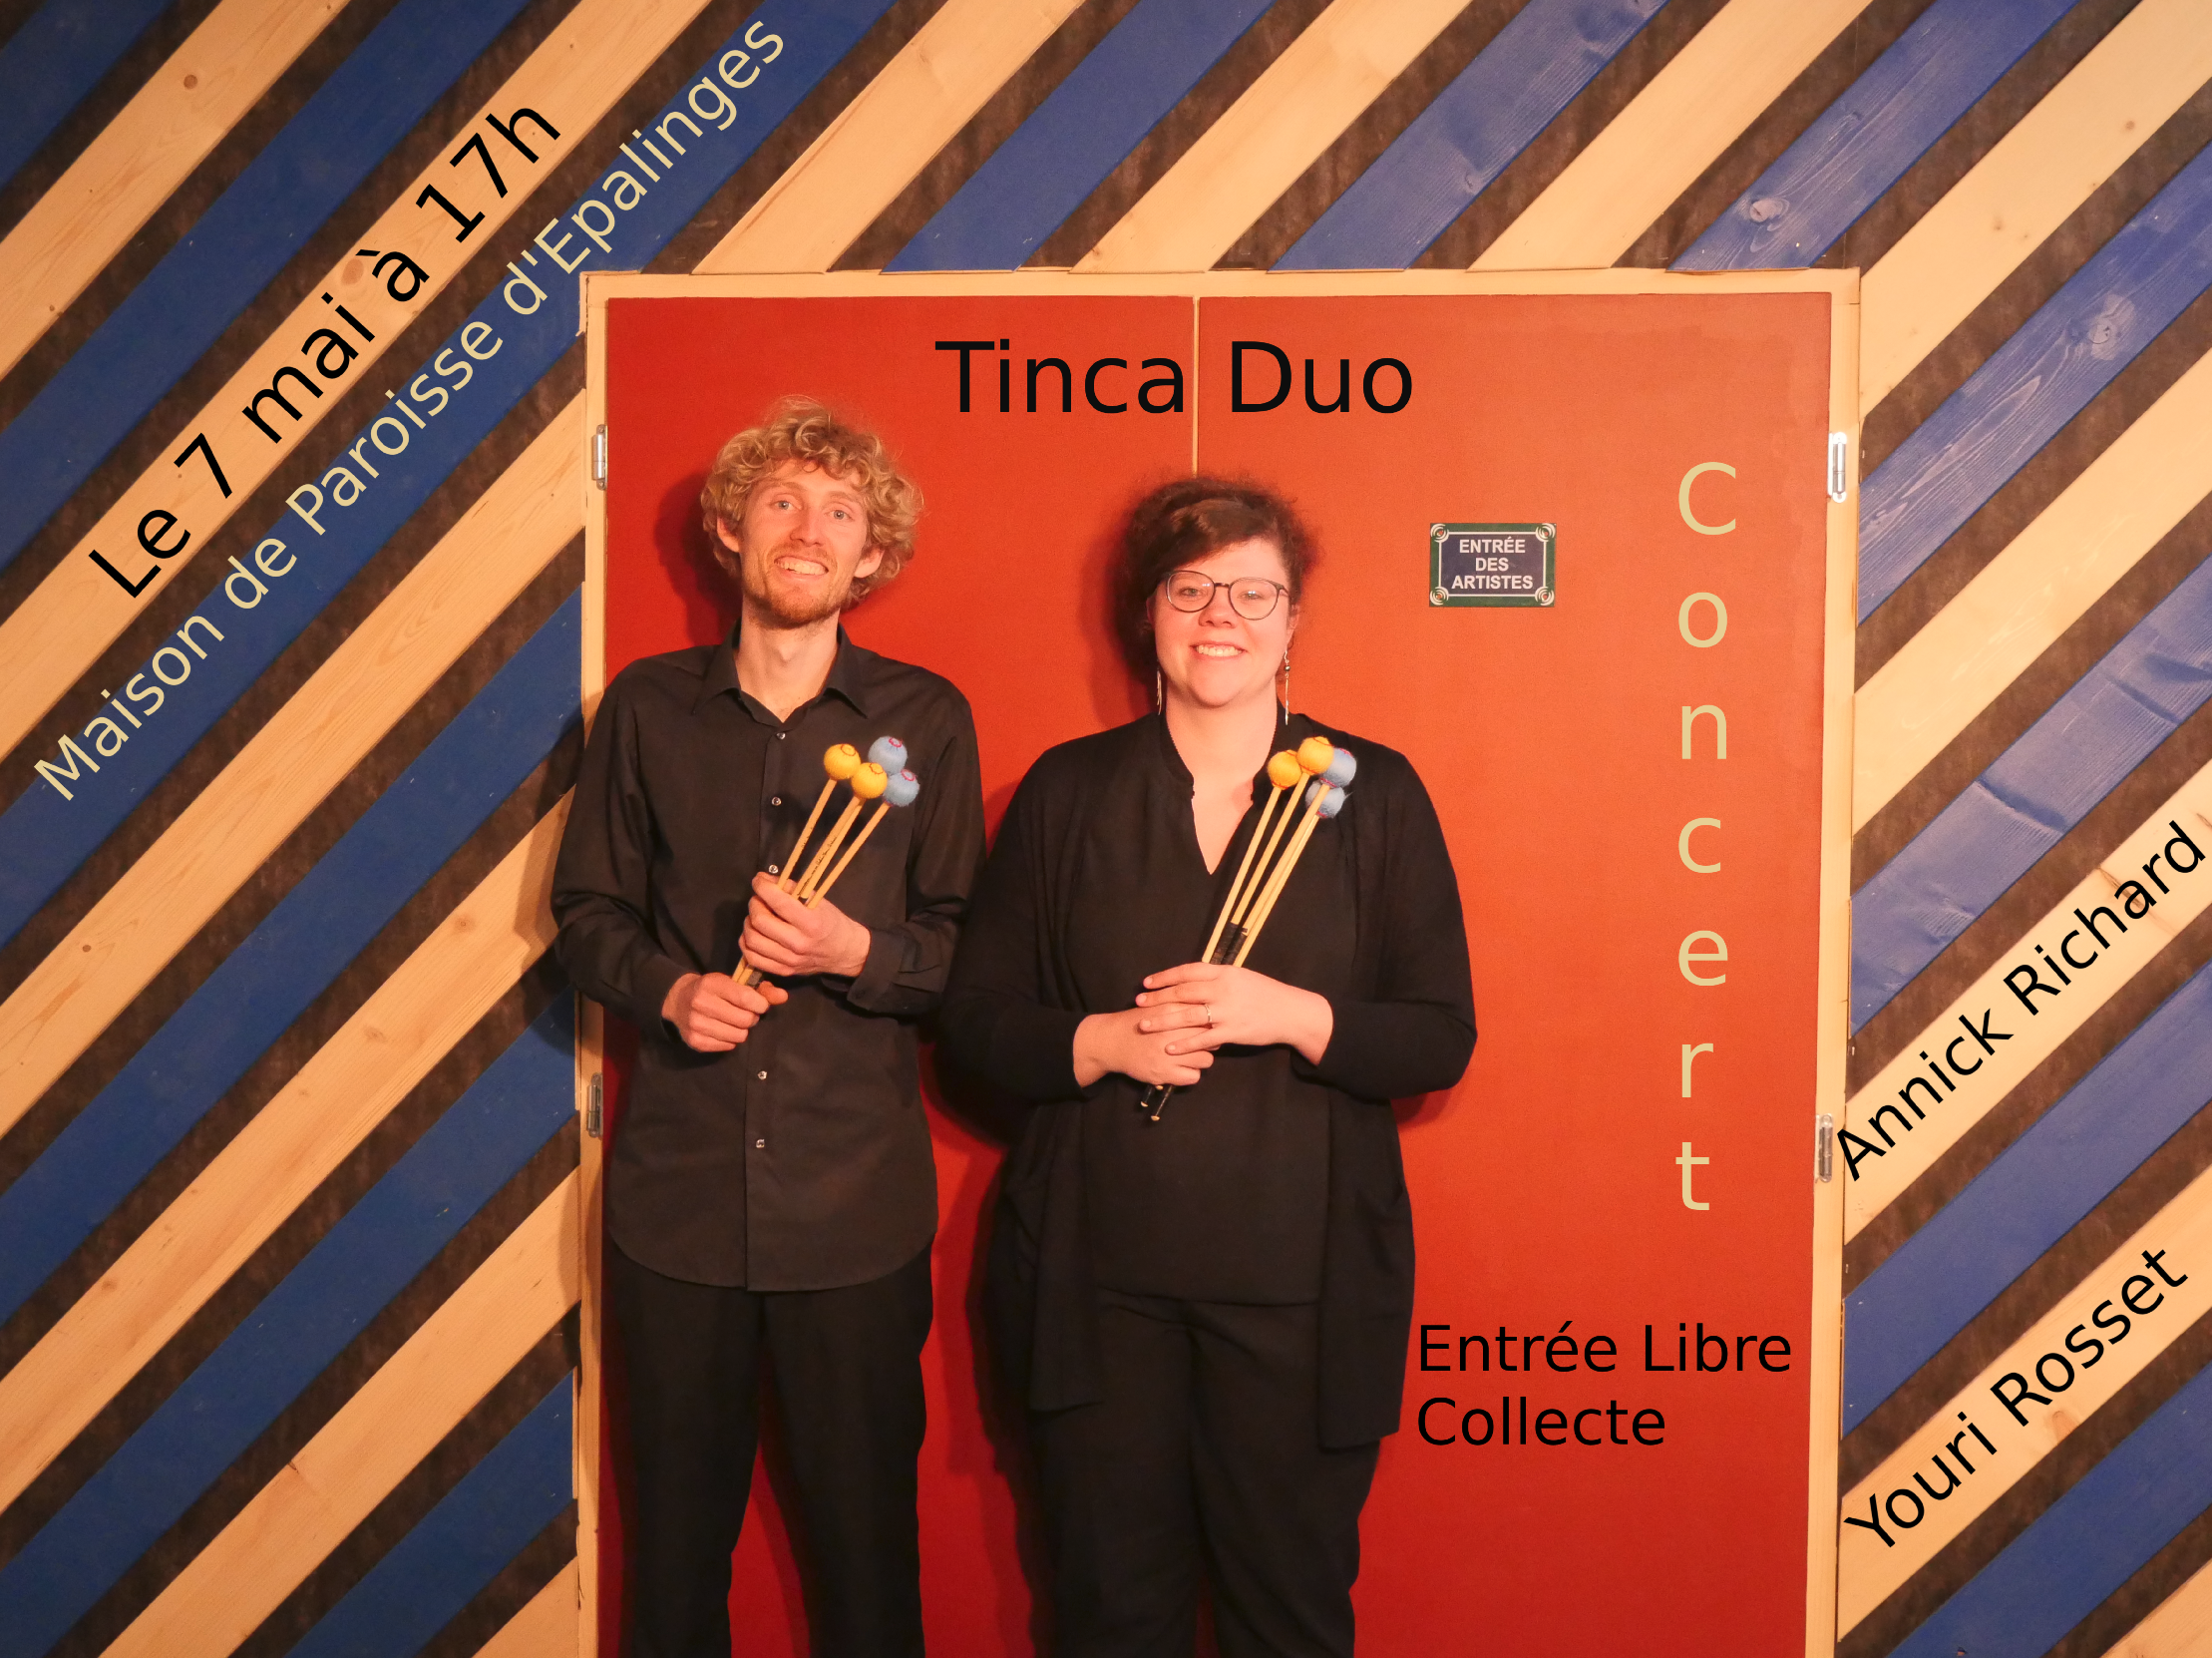 DI 7 mai 17h – Concert Tinca Duo – Epalinges